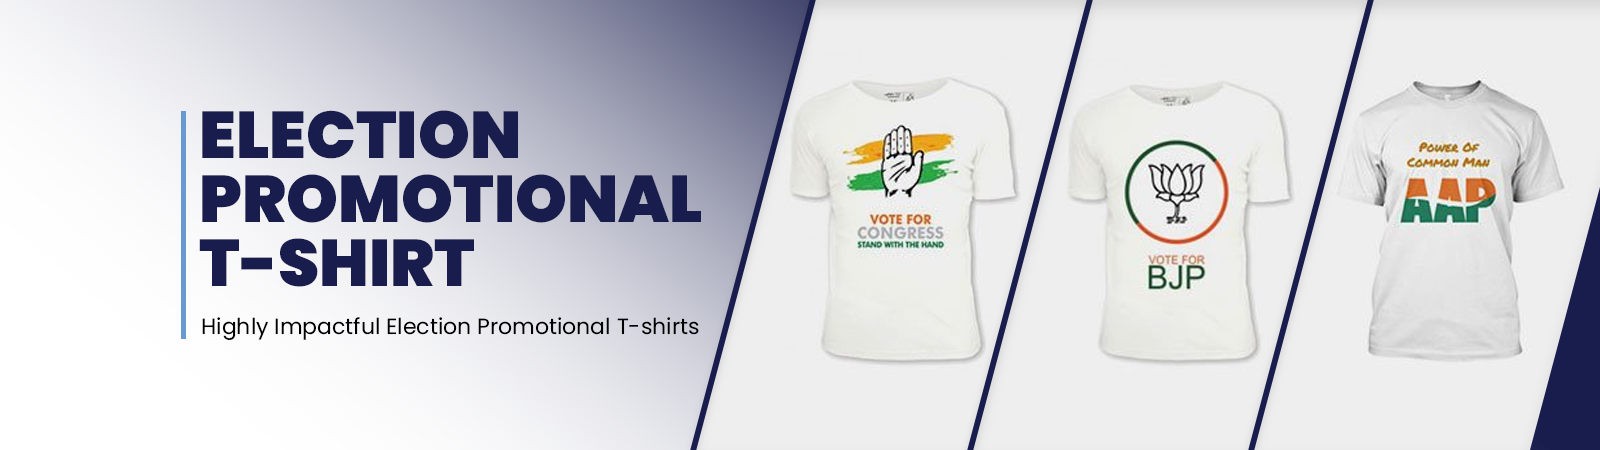 CPI Election T-Shirt